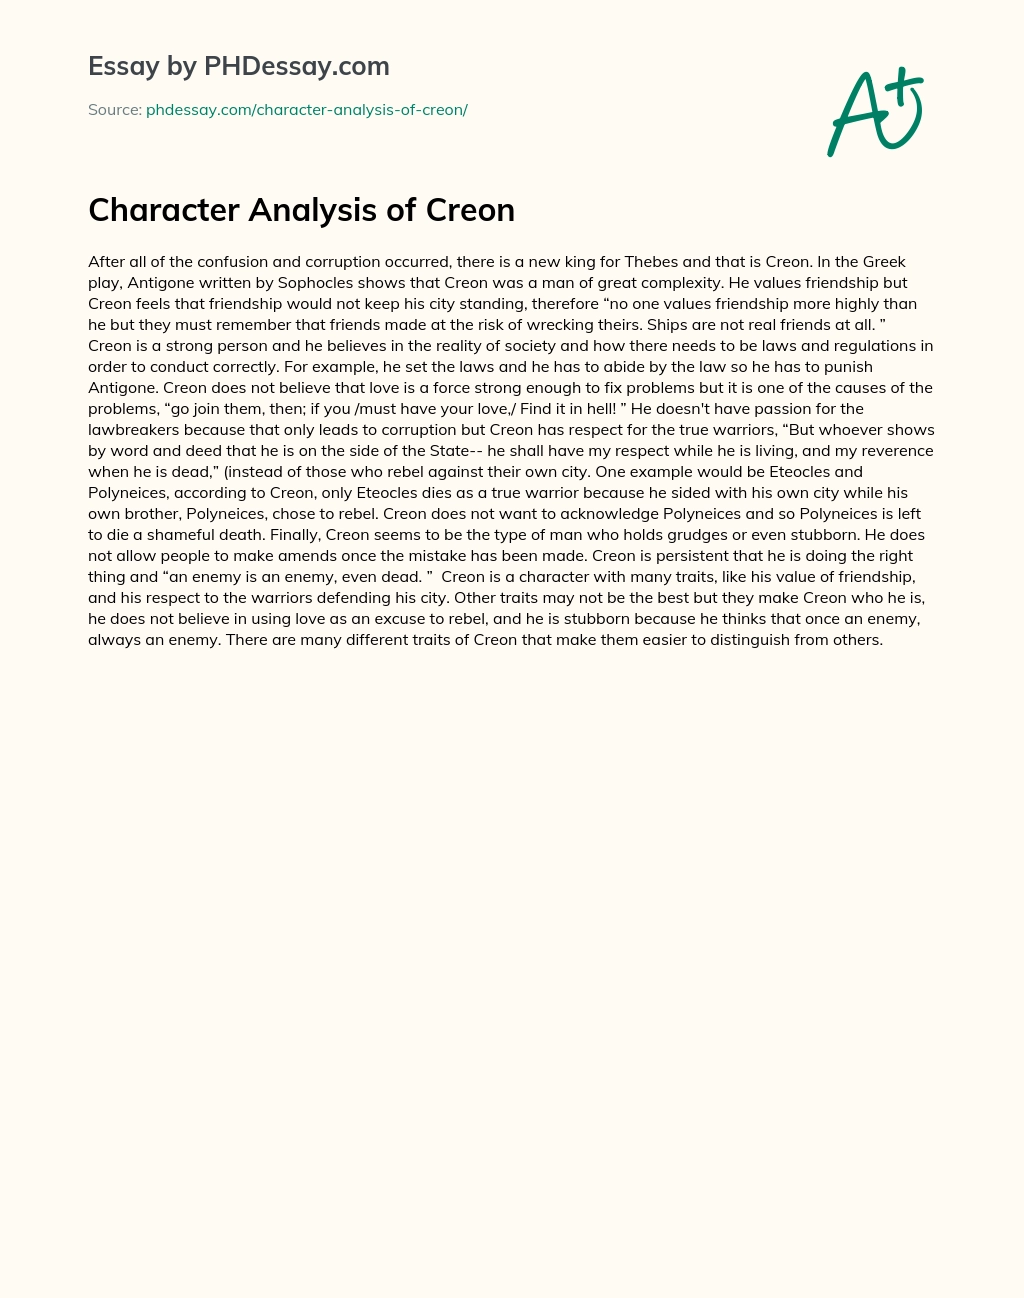 Character Analysis of Creon essay